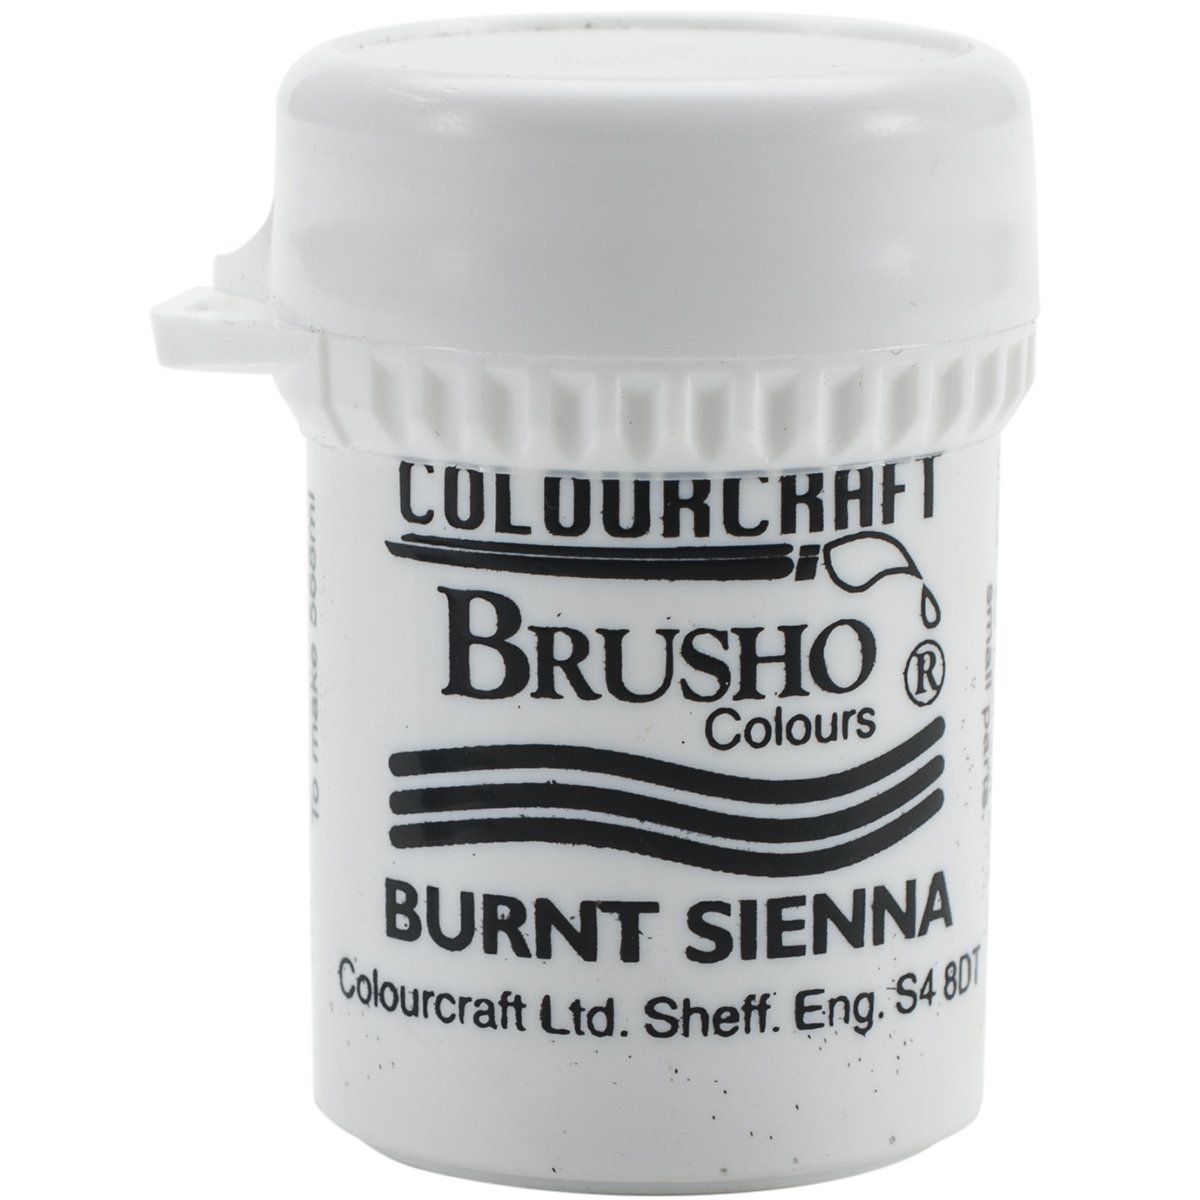 Brusho Crystal Colour - Burnt Sienna 15 gm